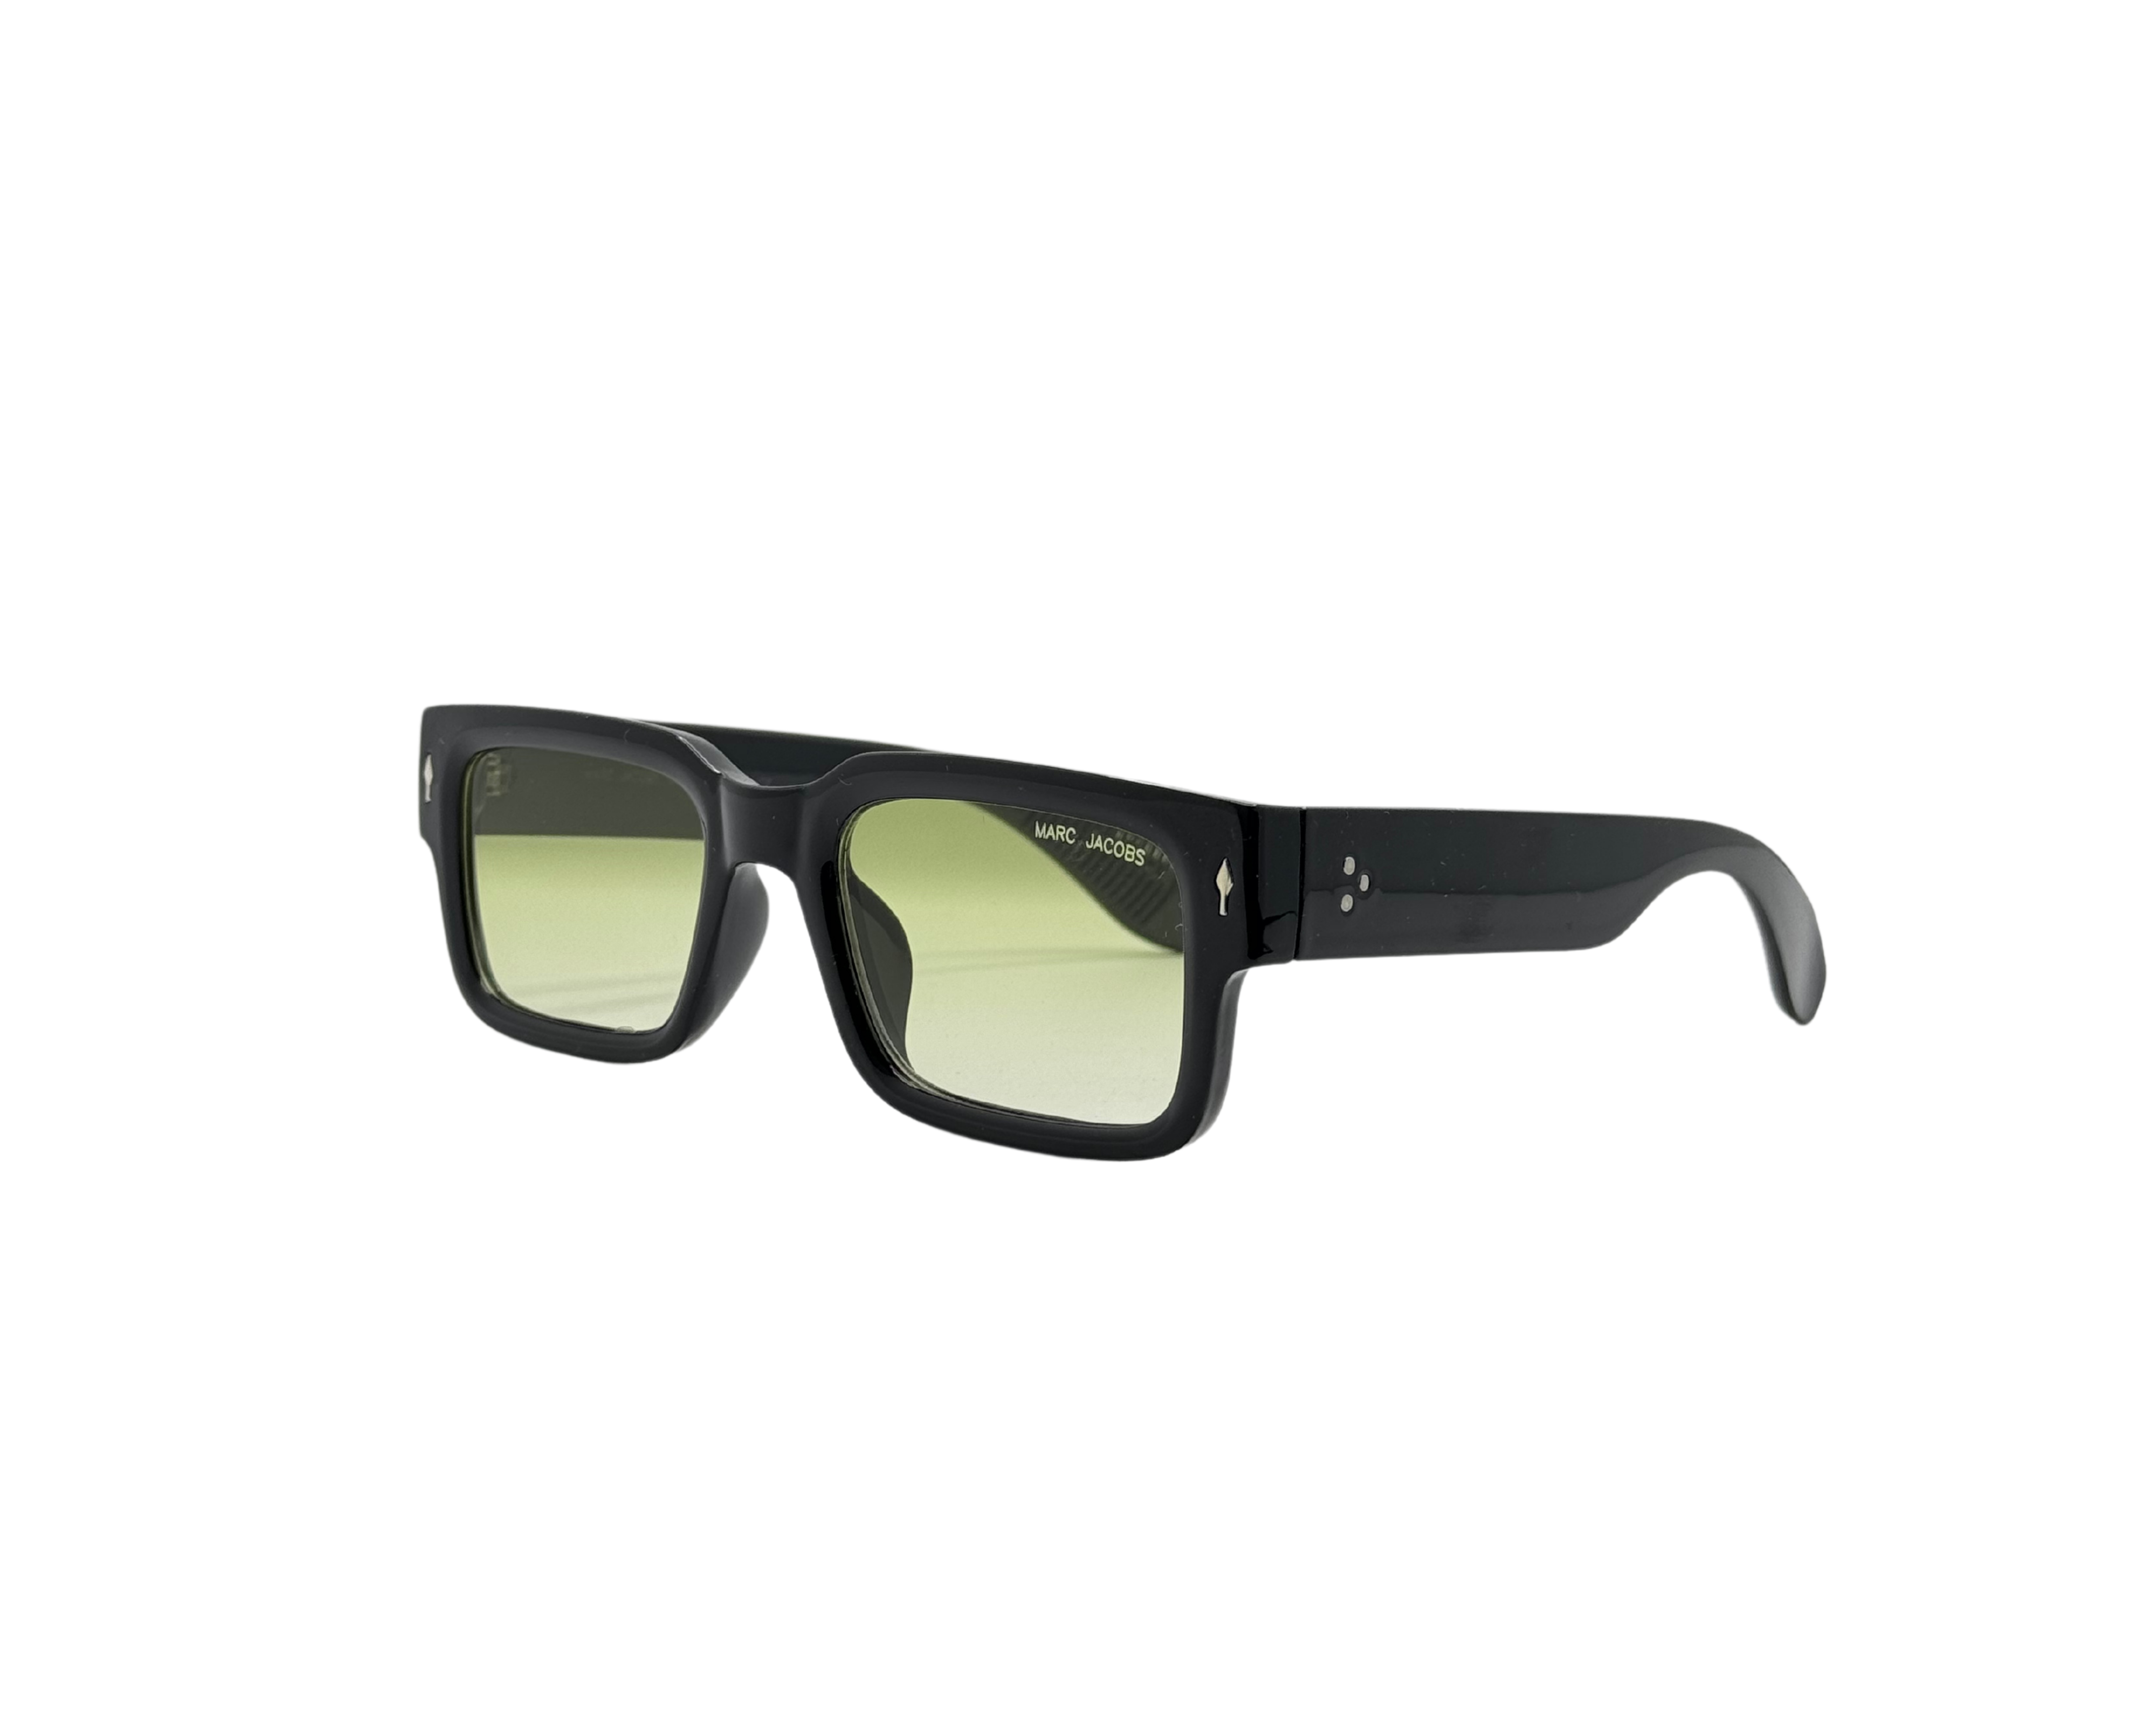 NS Deluxe - 6767 - Black - Sunglasses